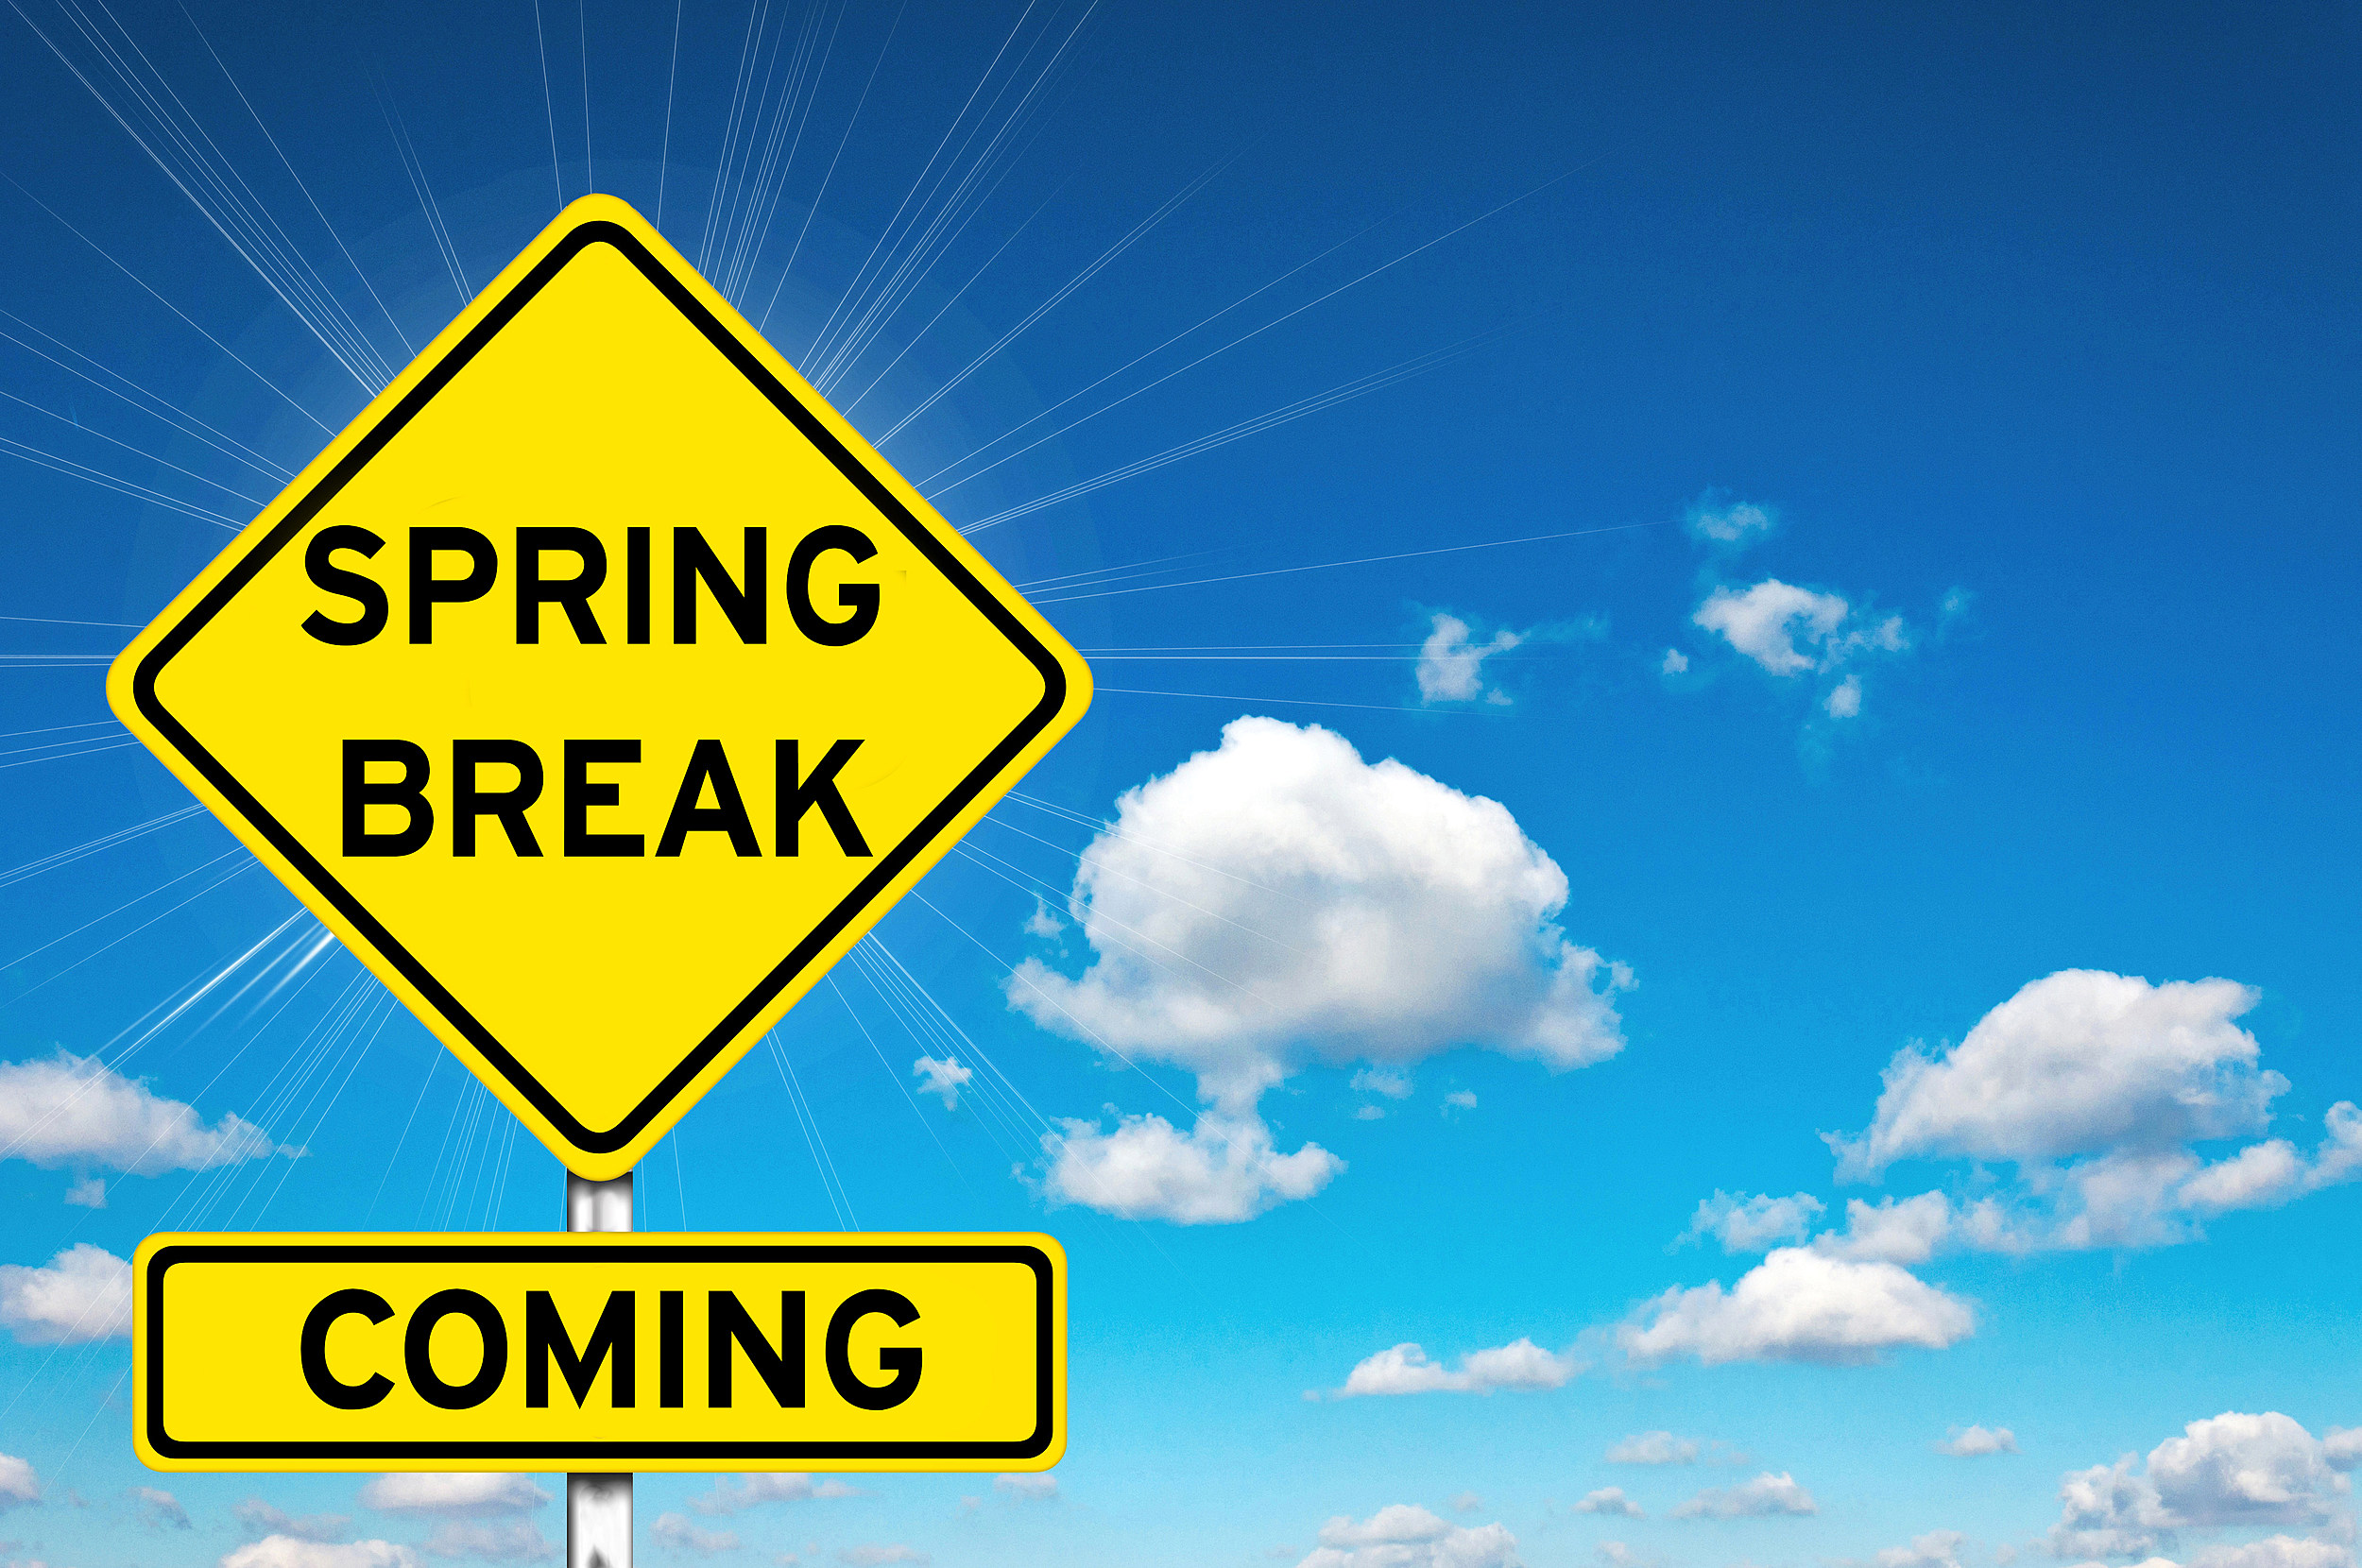 16 Things to Do in the Abilene Area During Spring Break